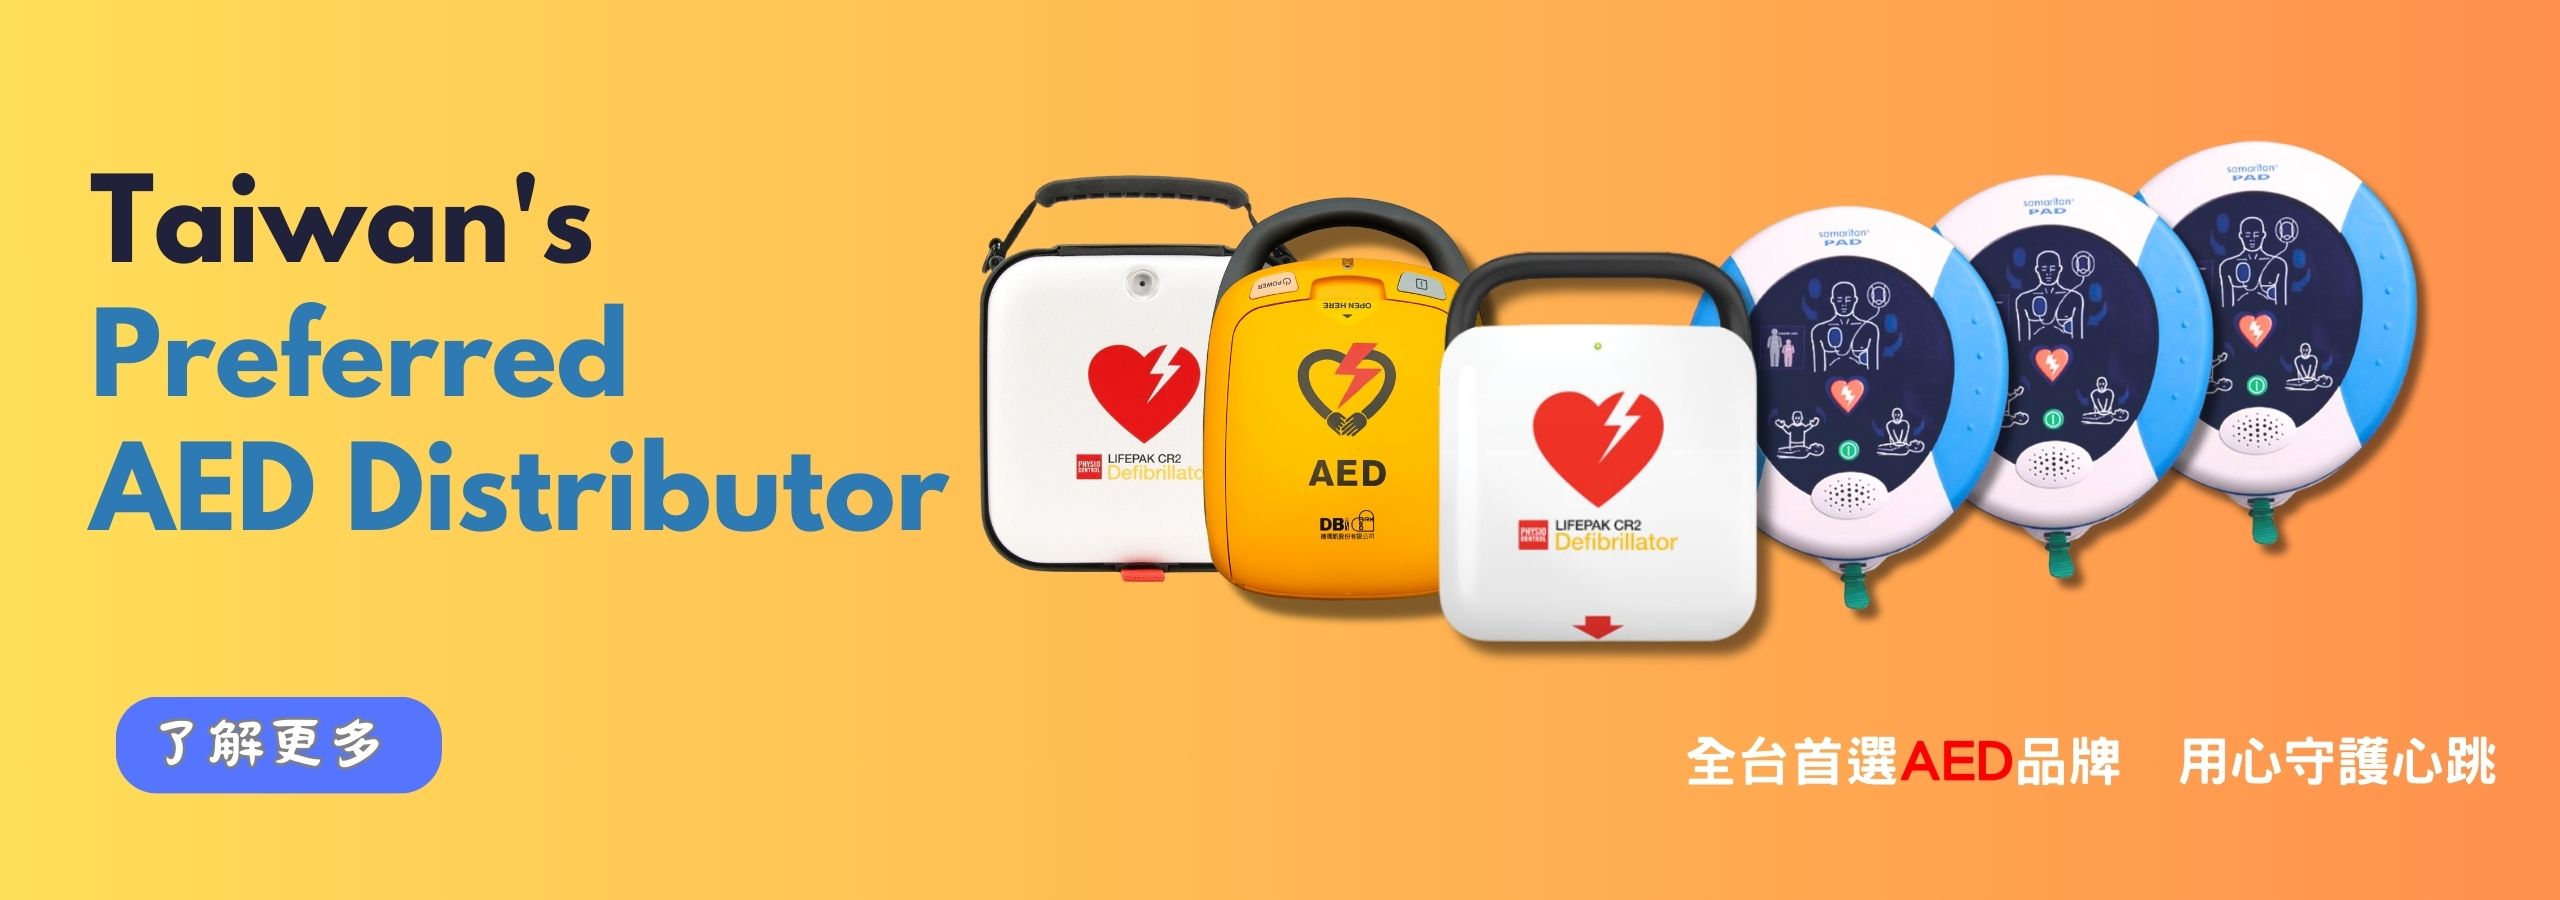 AED產品介紹